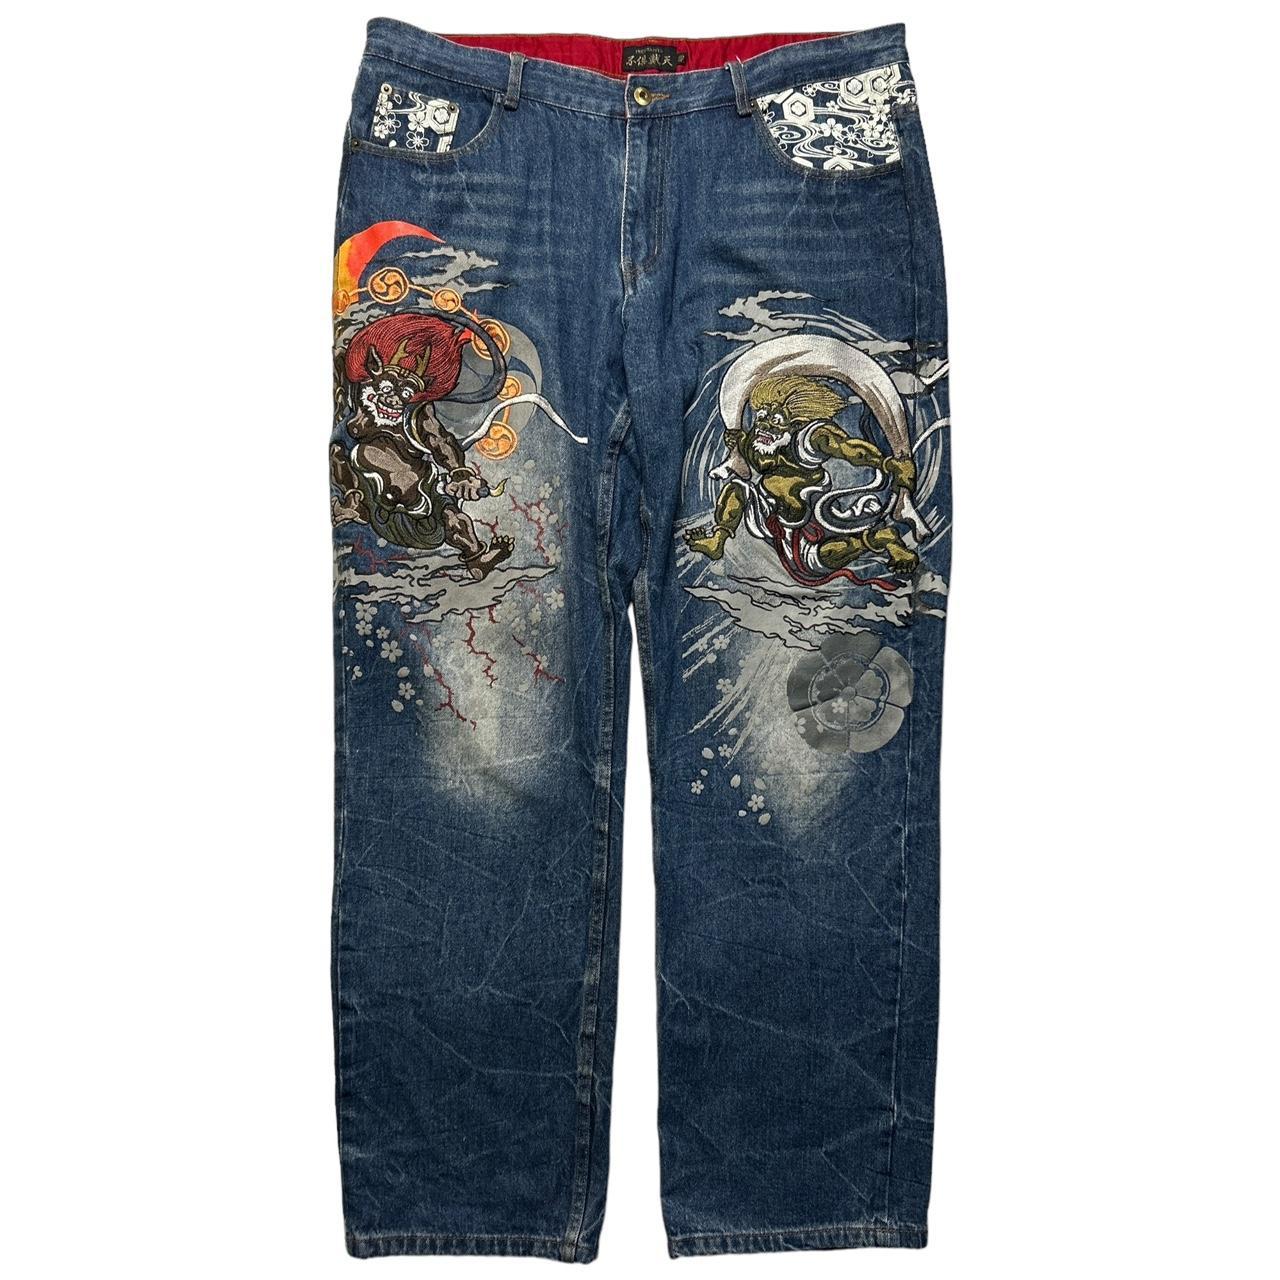 Japanese Jeans (40")